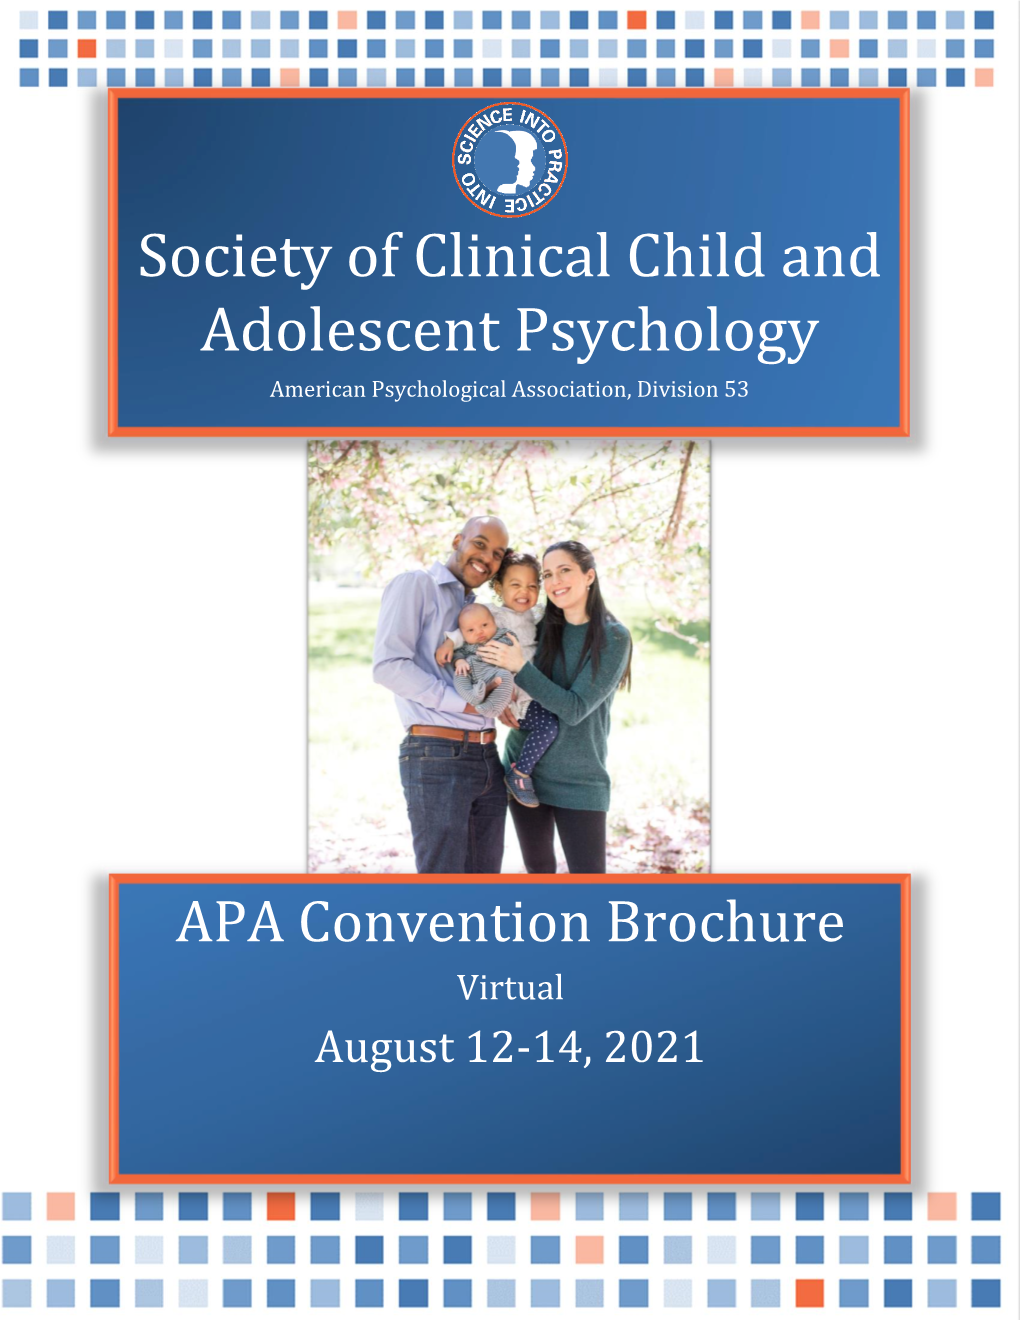 APA Convention Brochure Virtual August 12-14, 2021